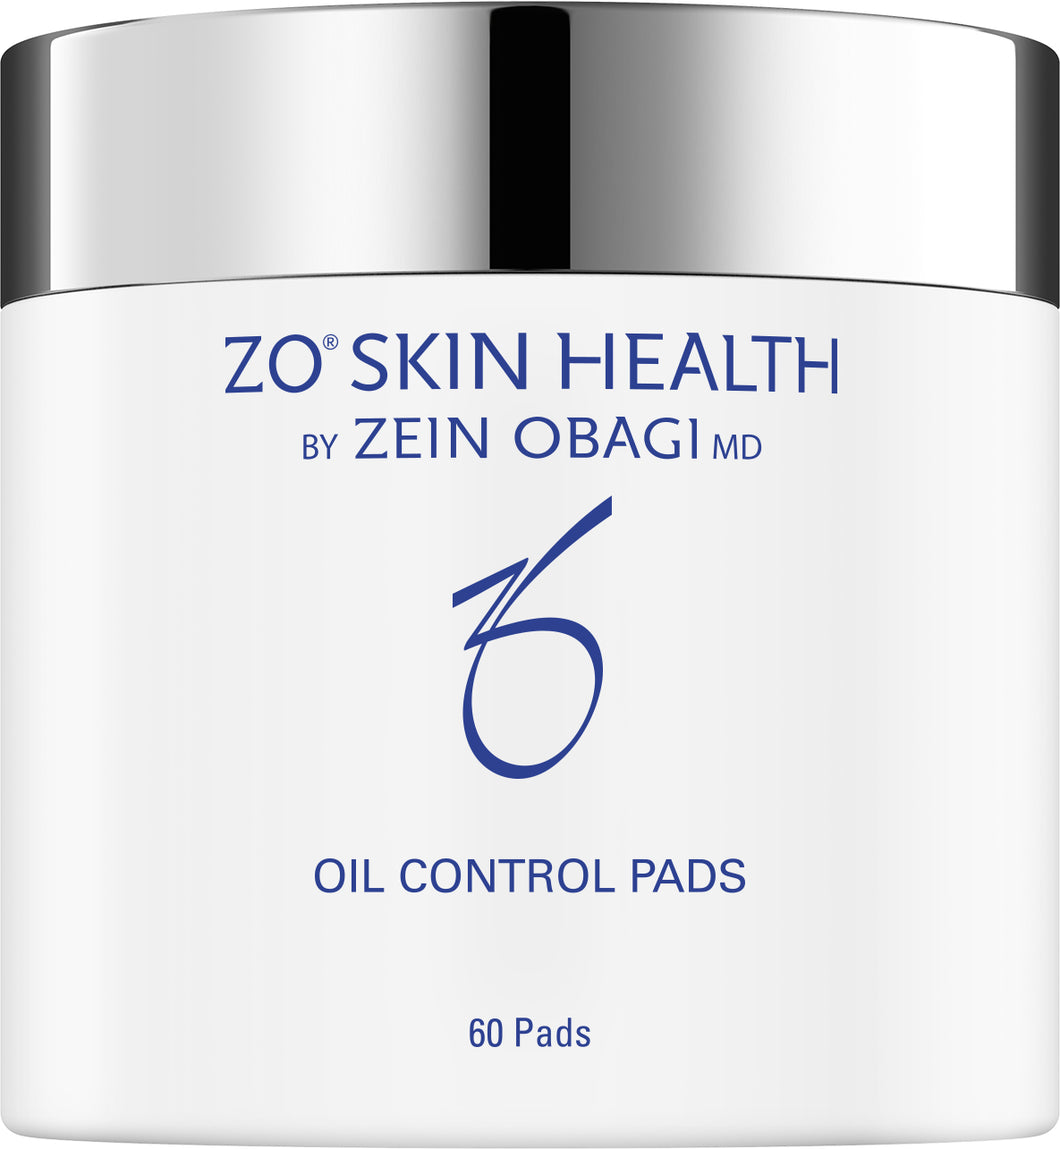 ZO SKIN HEALTH Oil Control Pads 60 pads - $140